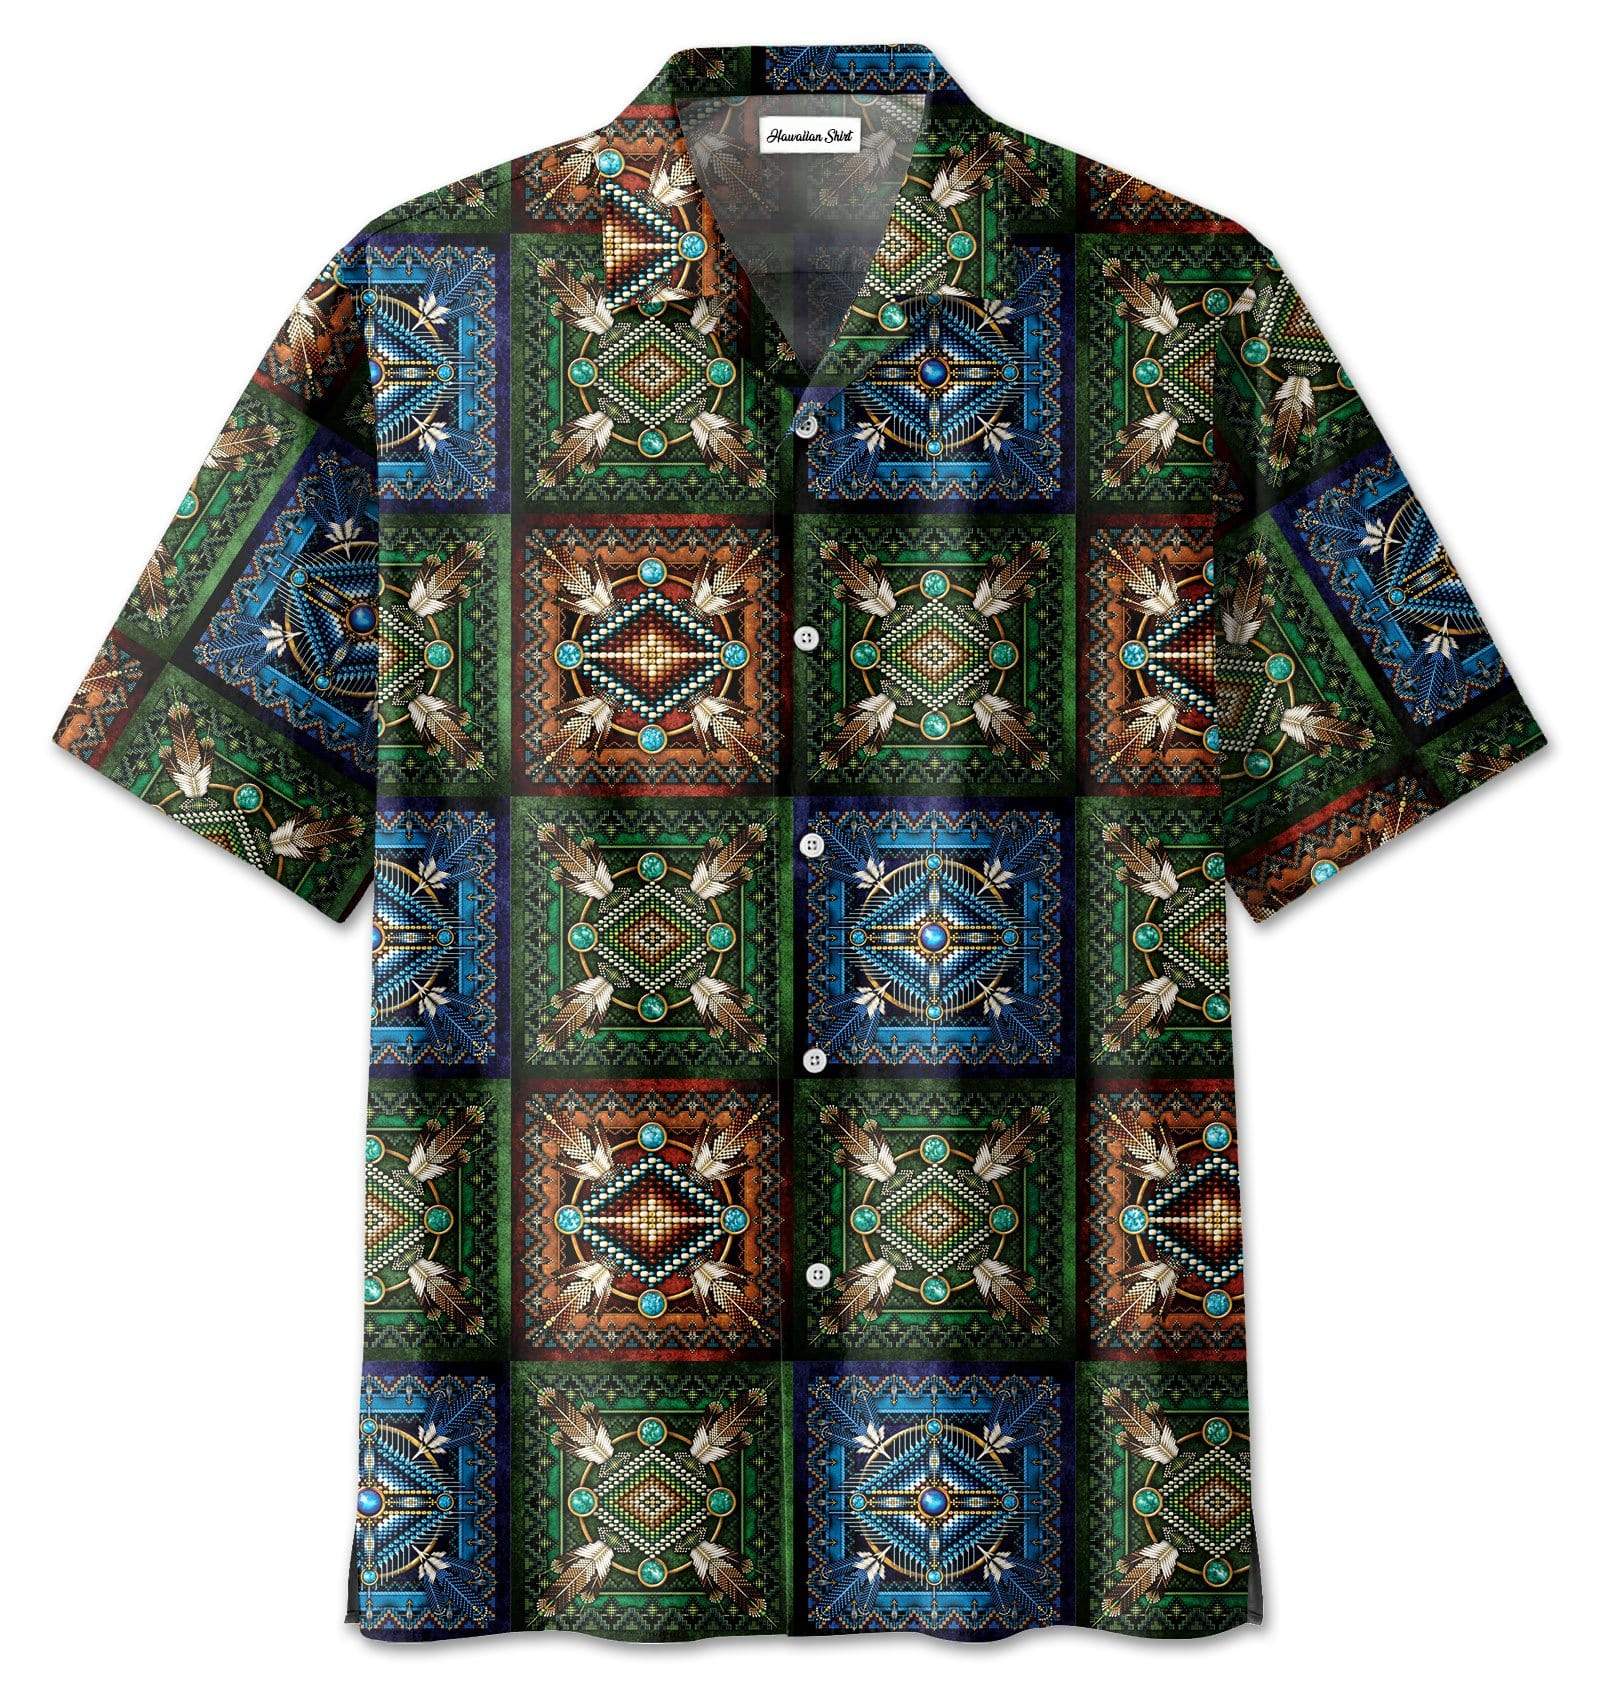 kurobase-amazing-native-american-art-pattern-hawaiian-aloha-shirts-28721dh.jpg